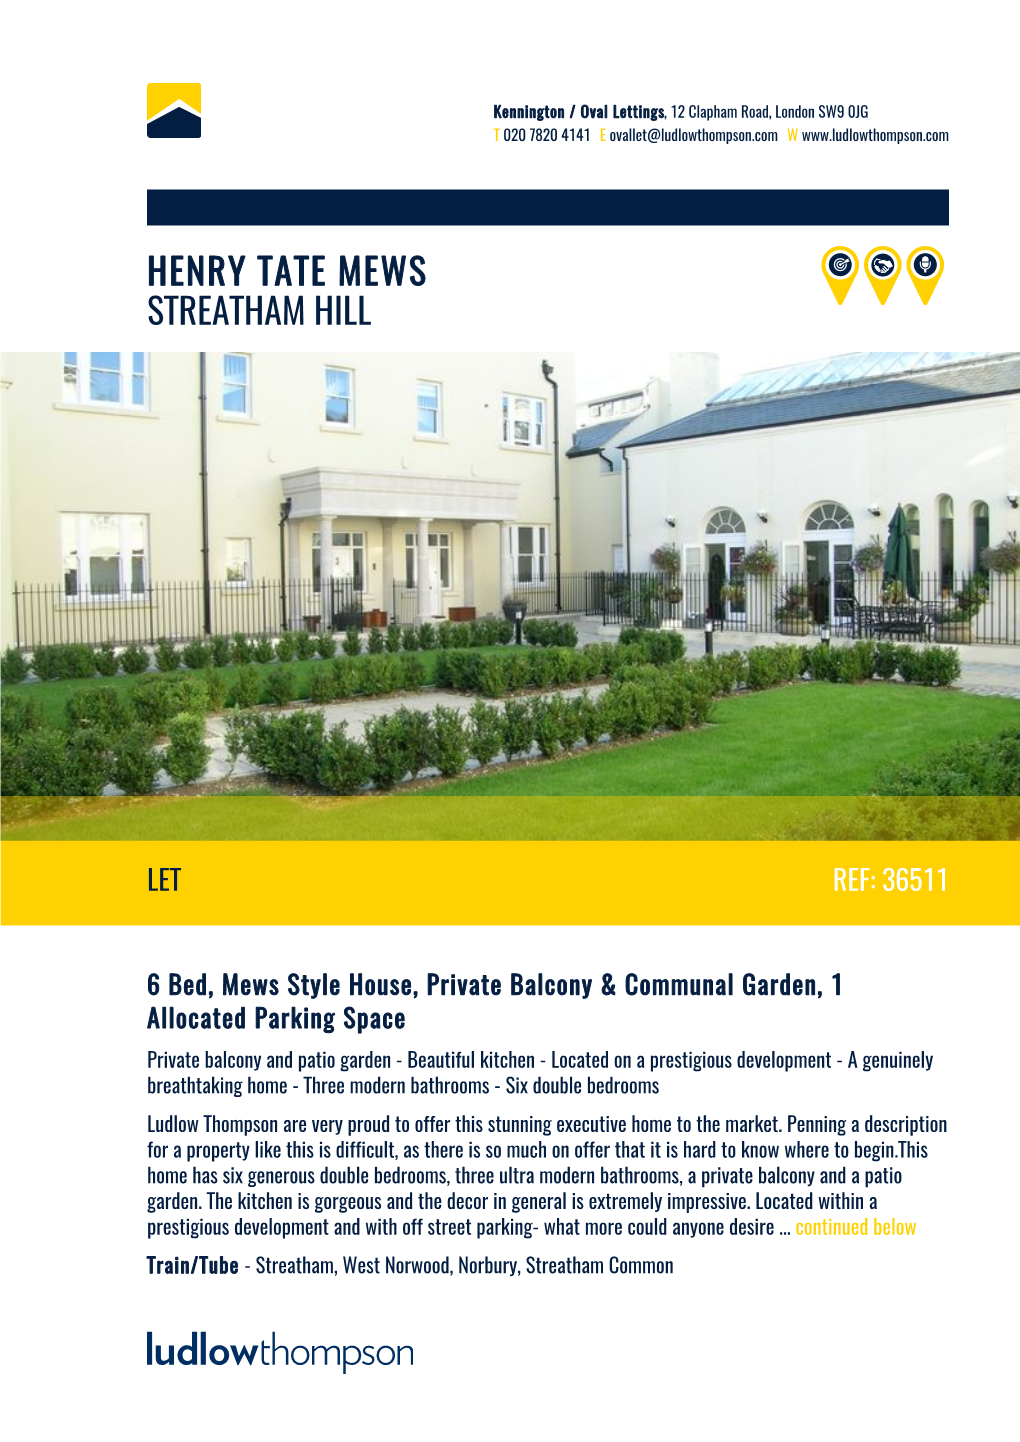 Henry Tate Mews Streatham Hill